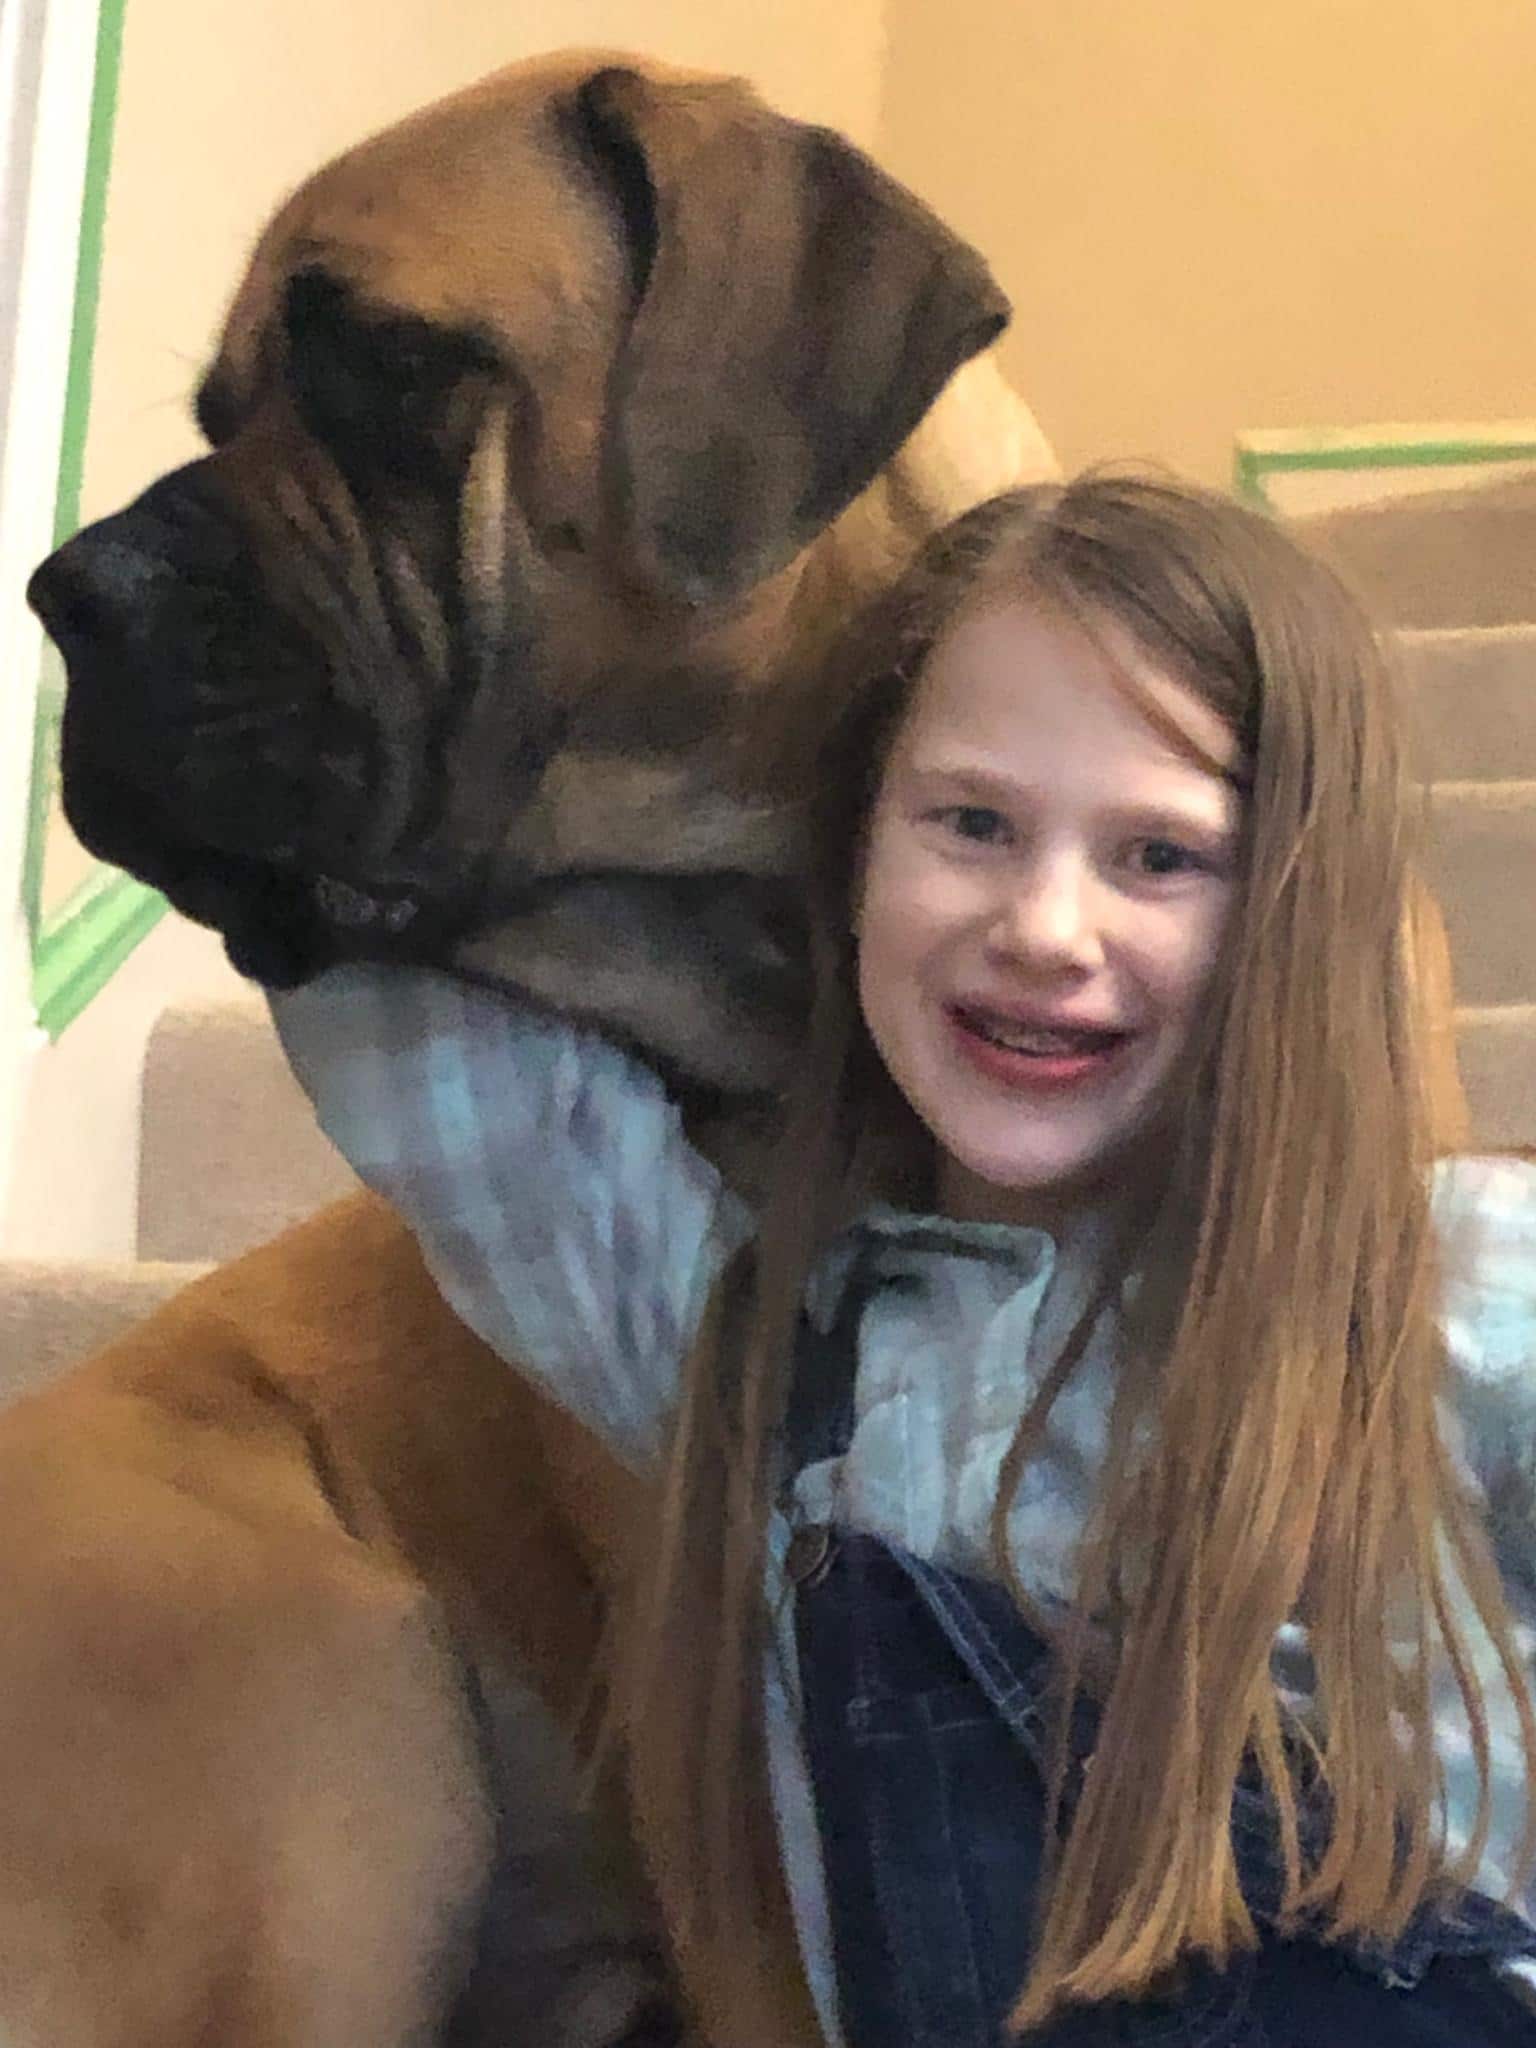 Big Dog Where He Belongs, being hugged by "his Girl"s